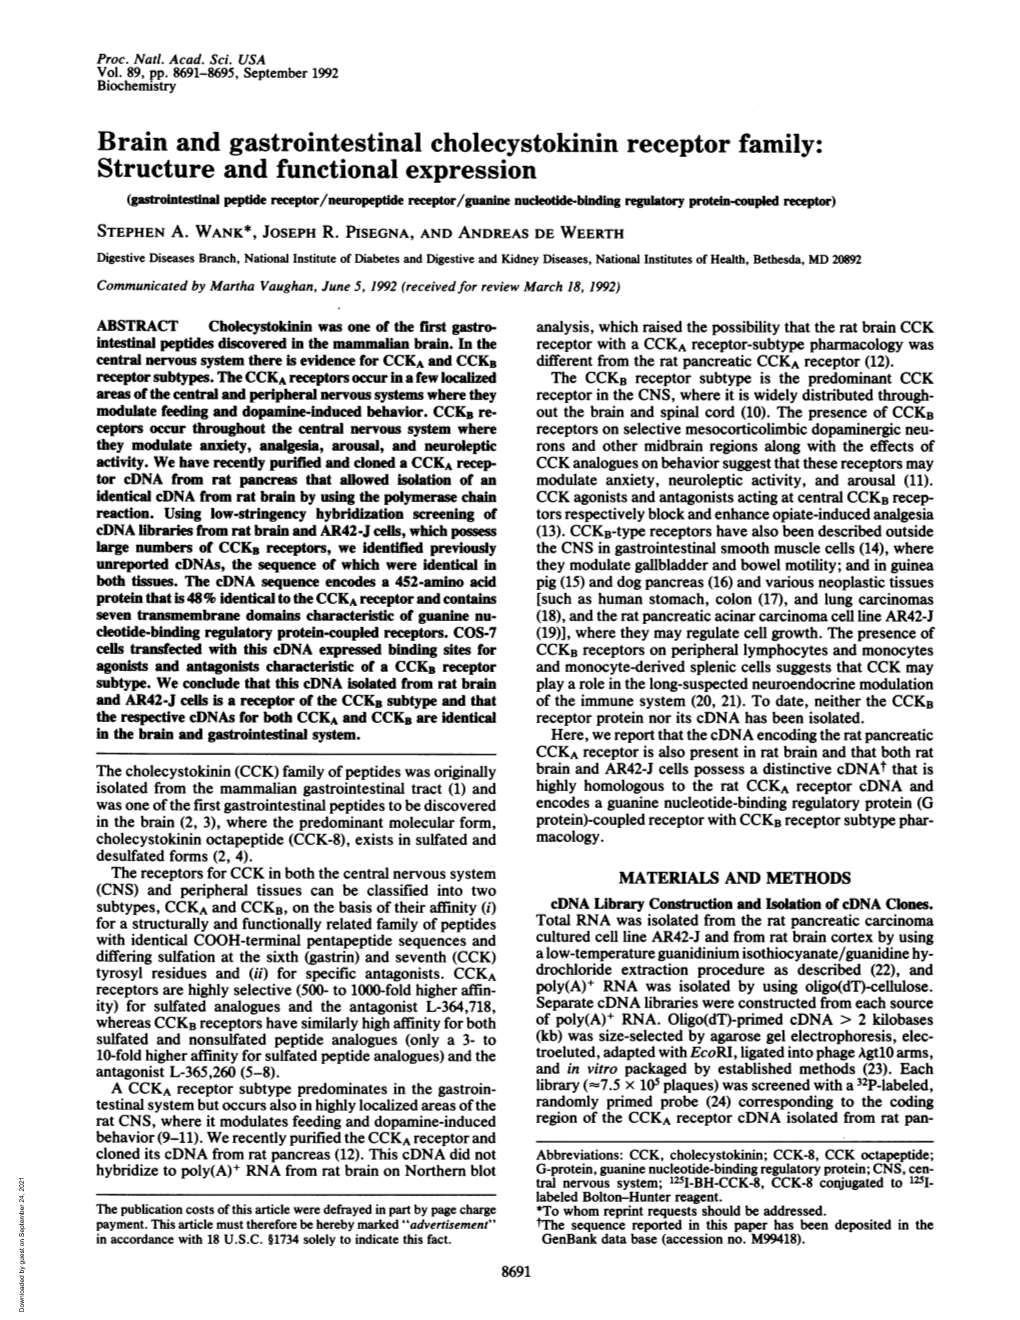 Brain and Gastrointestinal Cholecystokinin Receptor Family